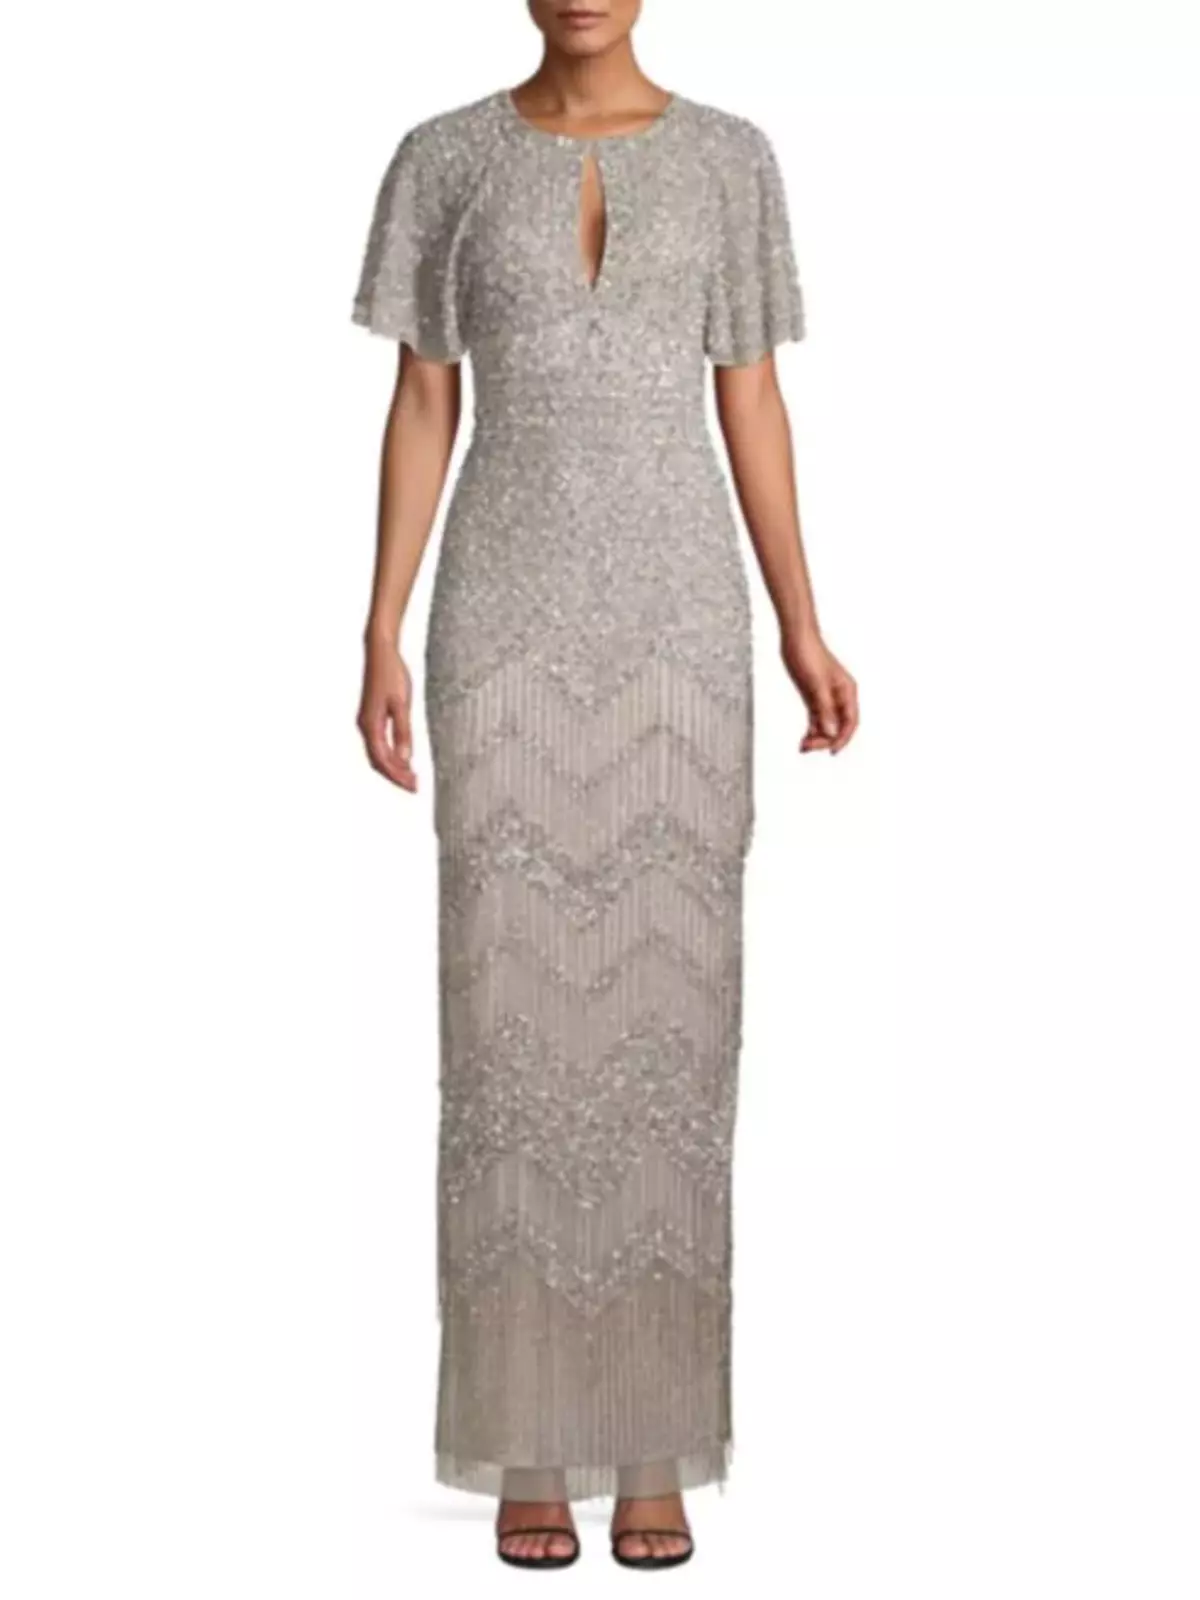 Lana del Rey comprou un vestido para Grammy no centro comercial por só 600 dólares 105466_3